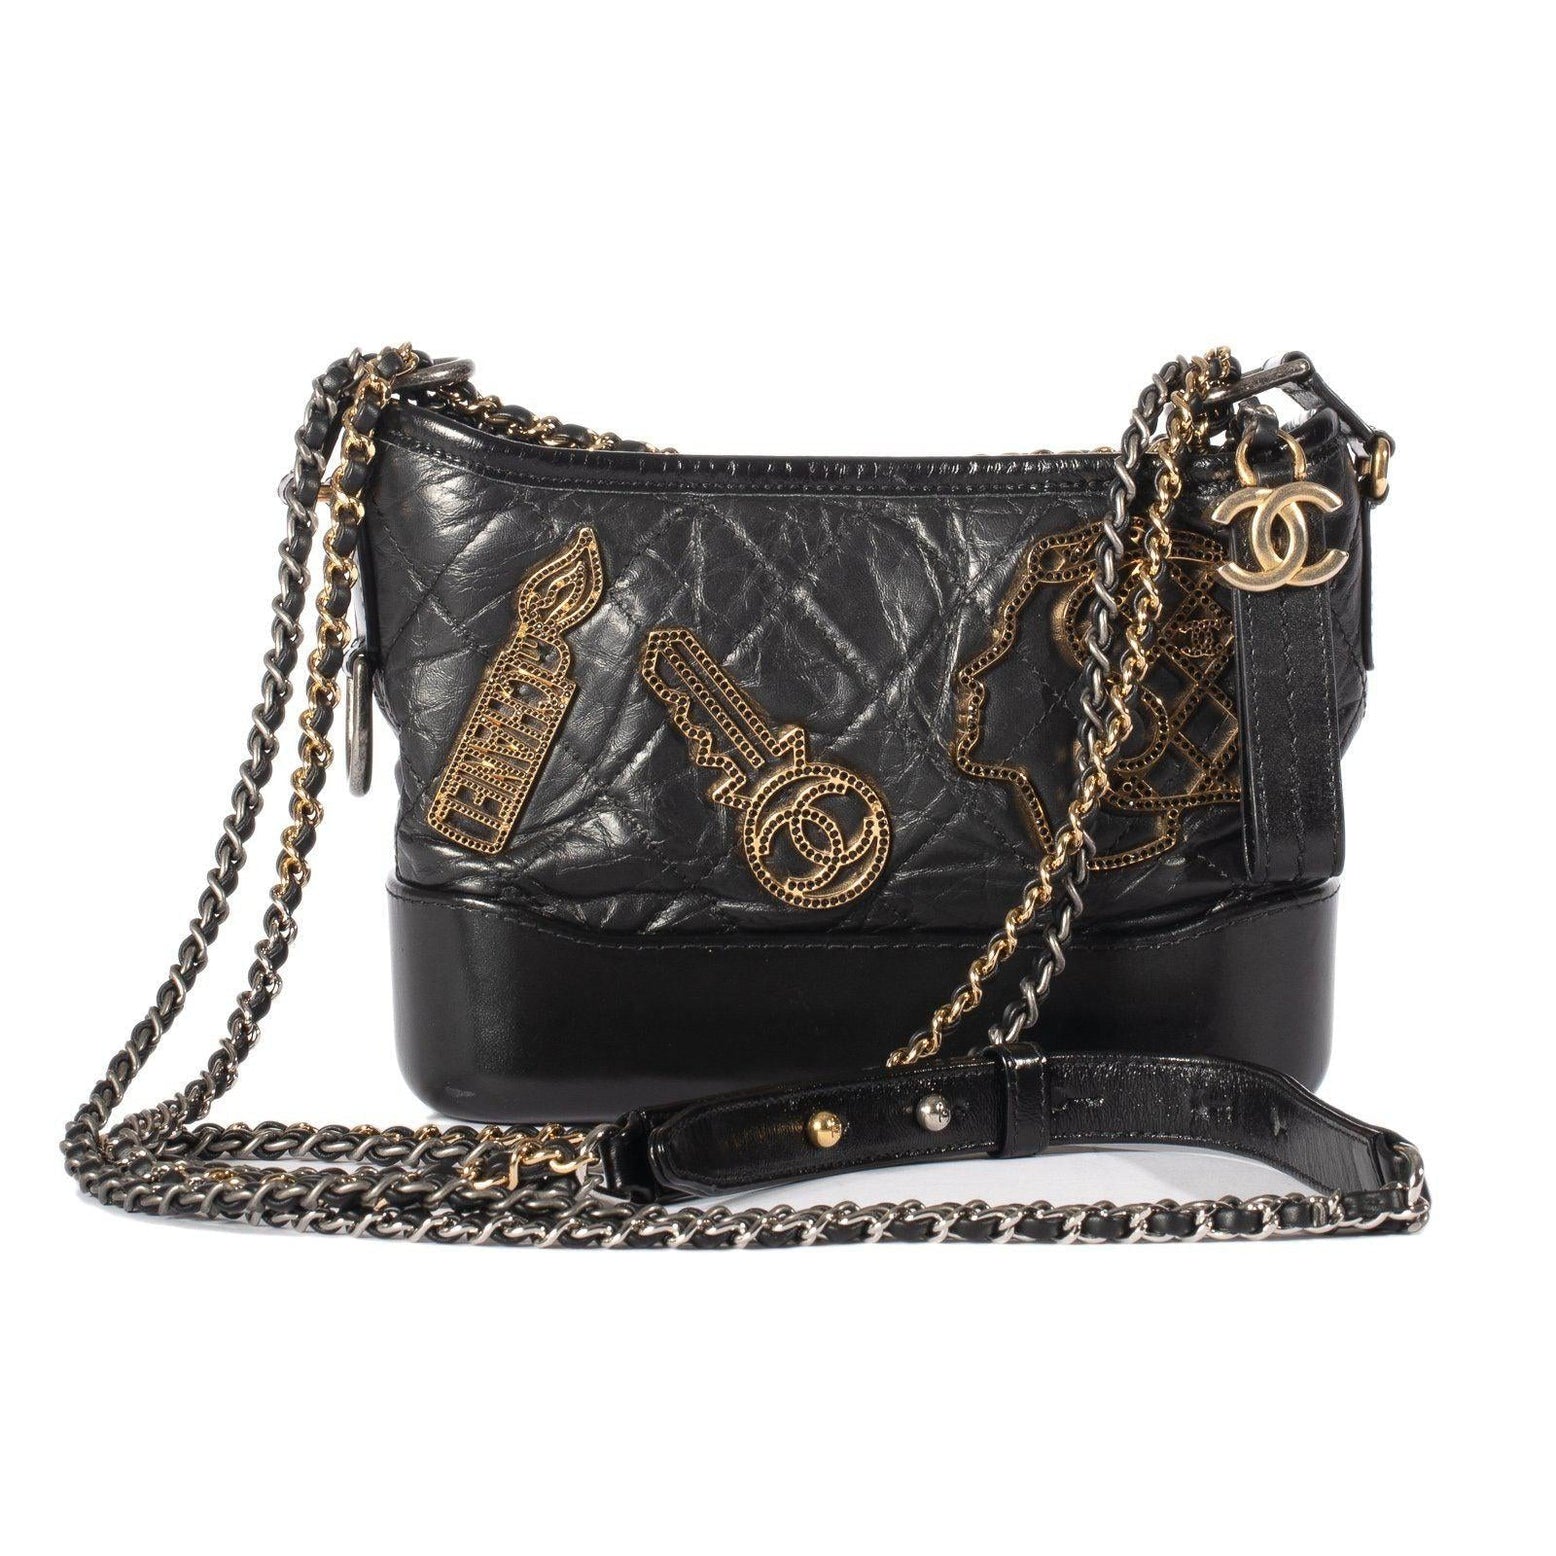 Bragmybag  Designer Bag And Shopping Guide  Chanel handbags collection  Women handbags Bags